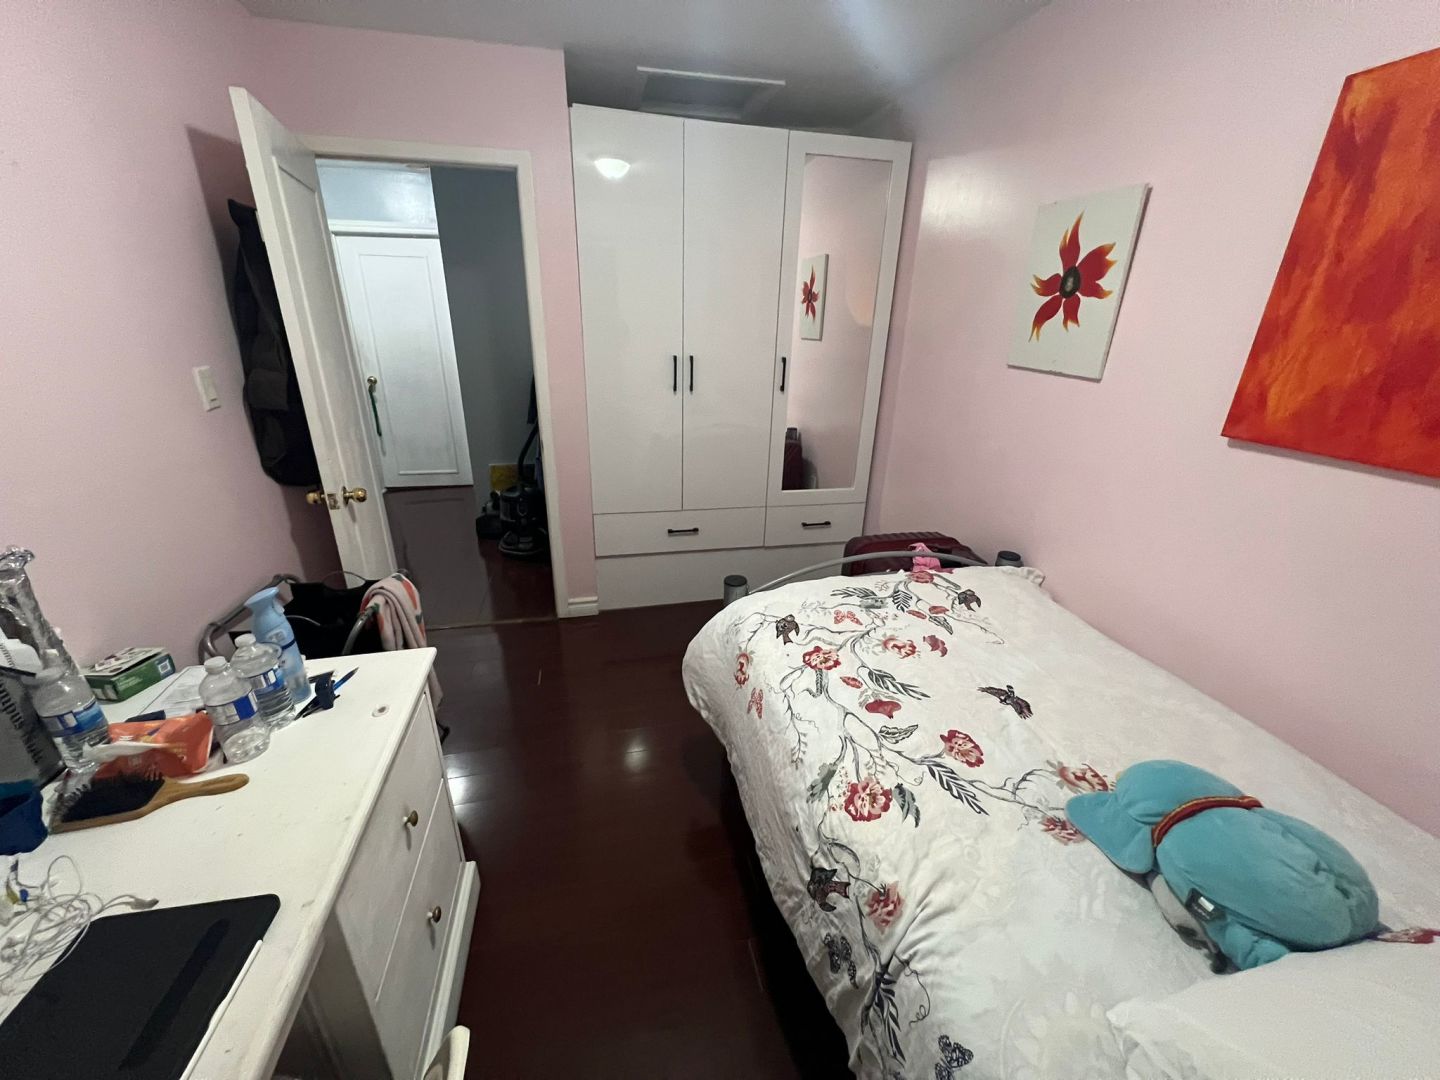 Elite Homestay Room - Dove Hawk Way, Toronto room for rent 1